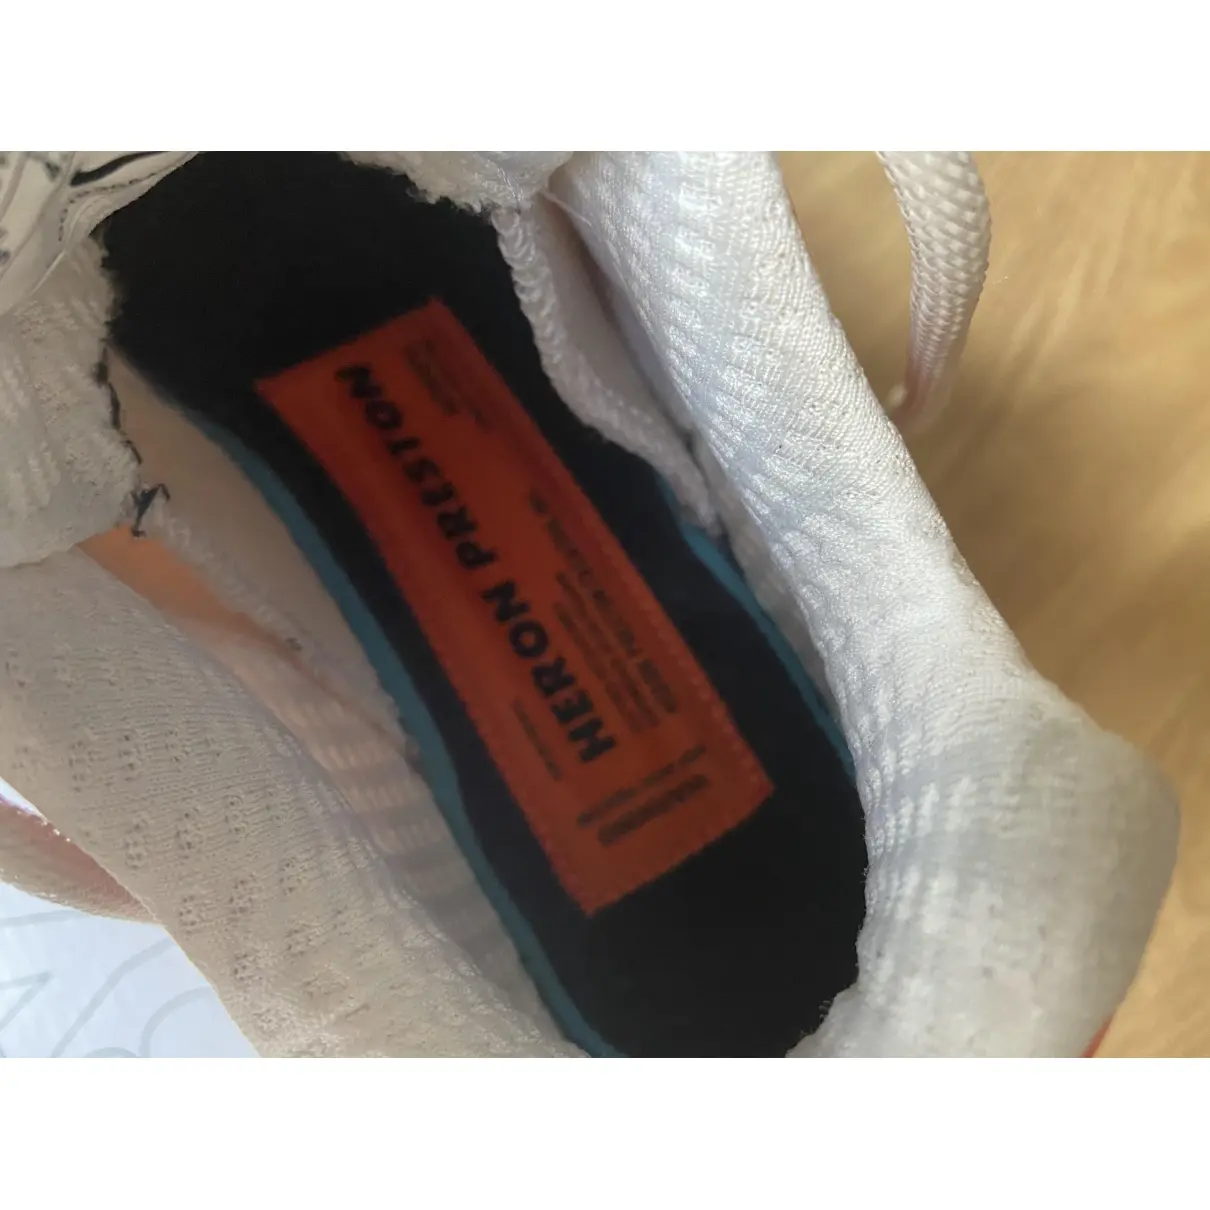 Buy Nike x Heron Preston Air Max 720/95 cloth trainers online